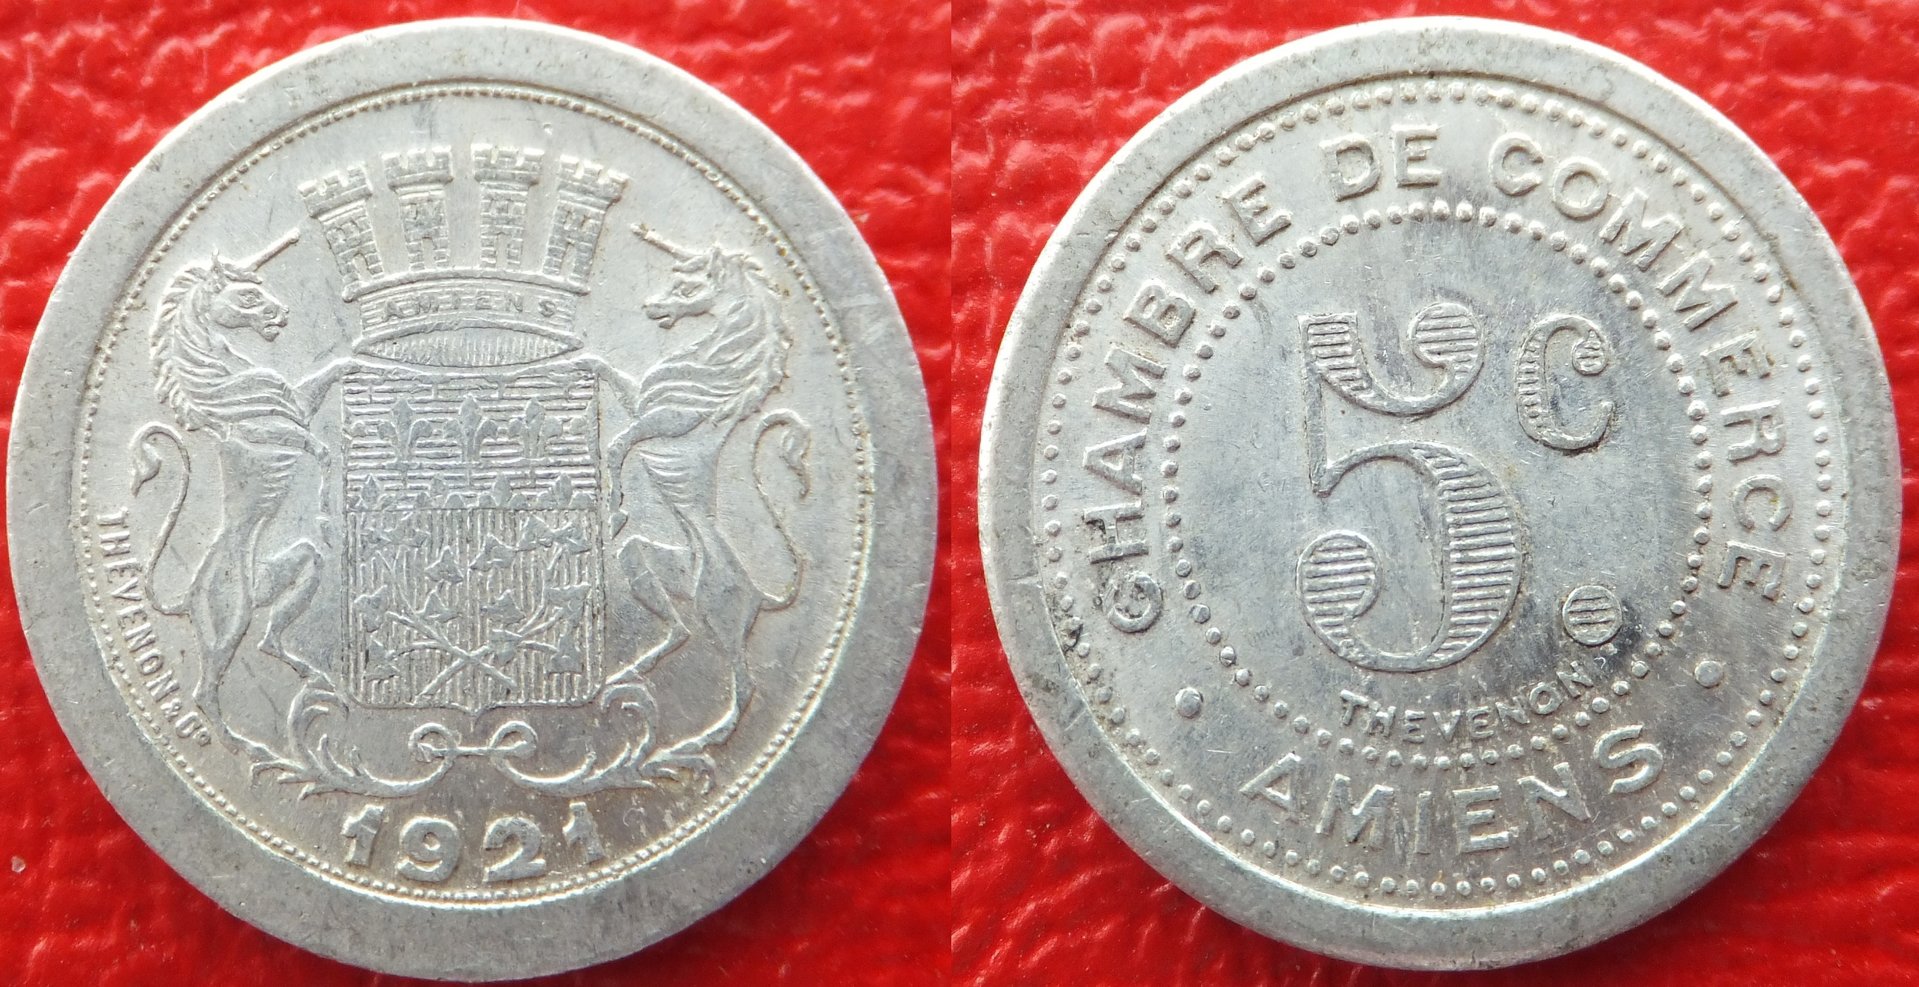 France - Amiens 5 centimes 1921 (3).jpg